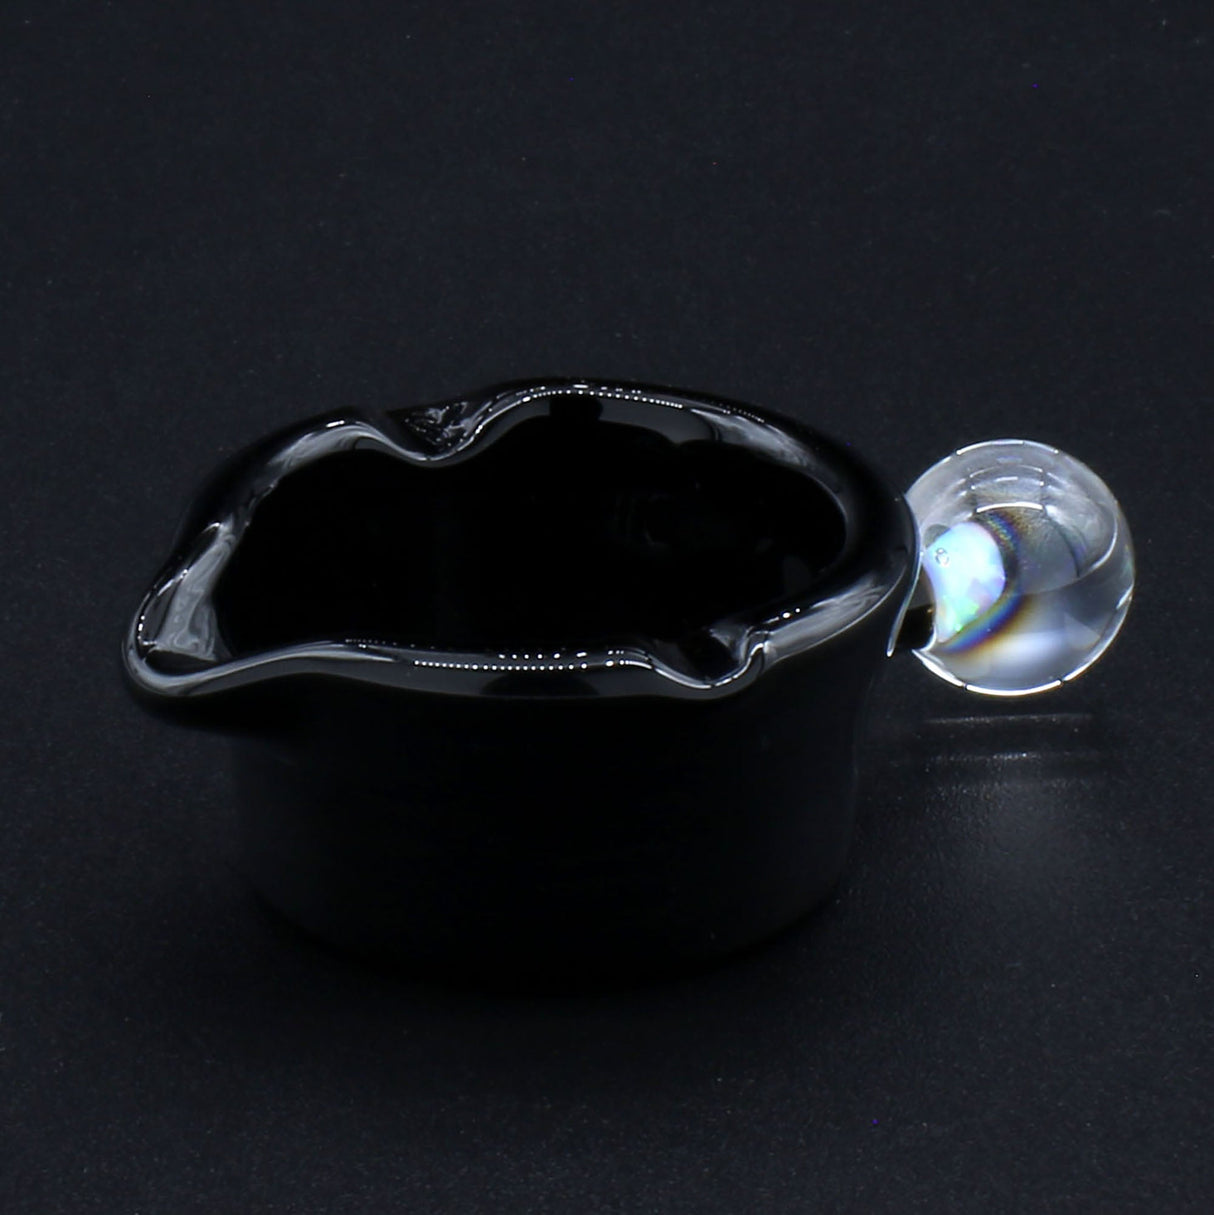 Clayball Glass "Black Jack" Heady Sherlock Dab Set with Borosilicate Glass on Black Background